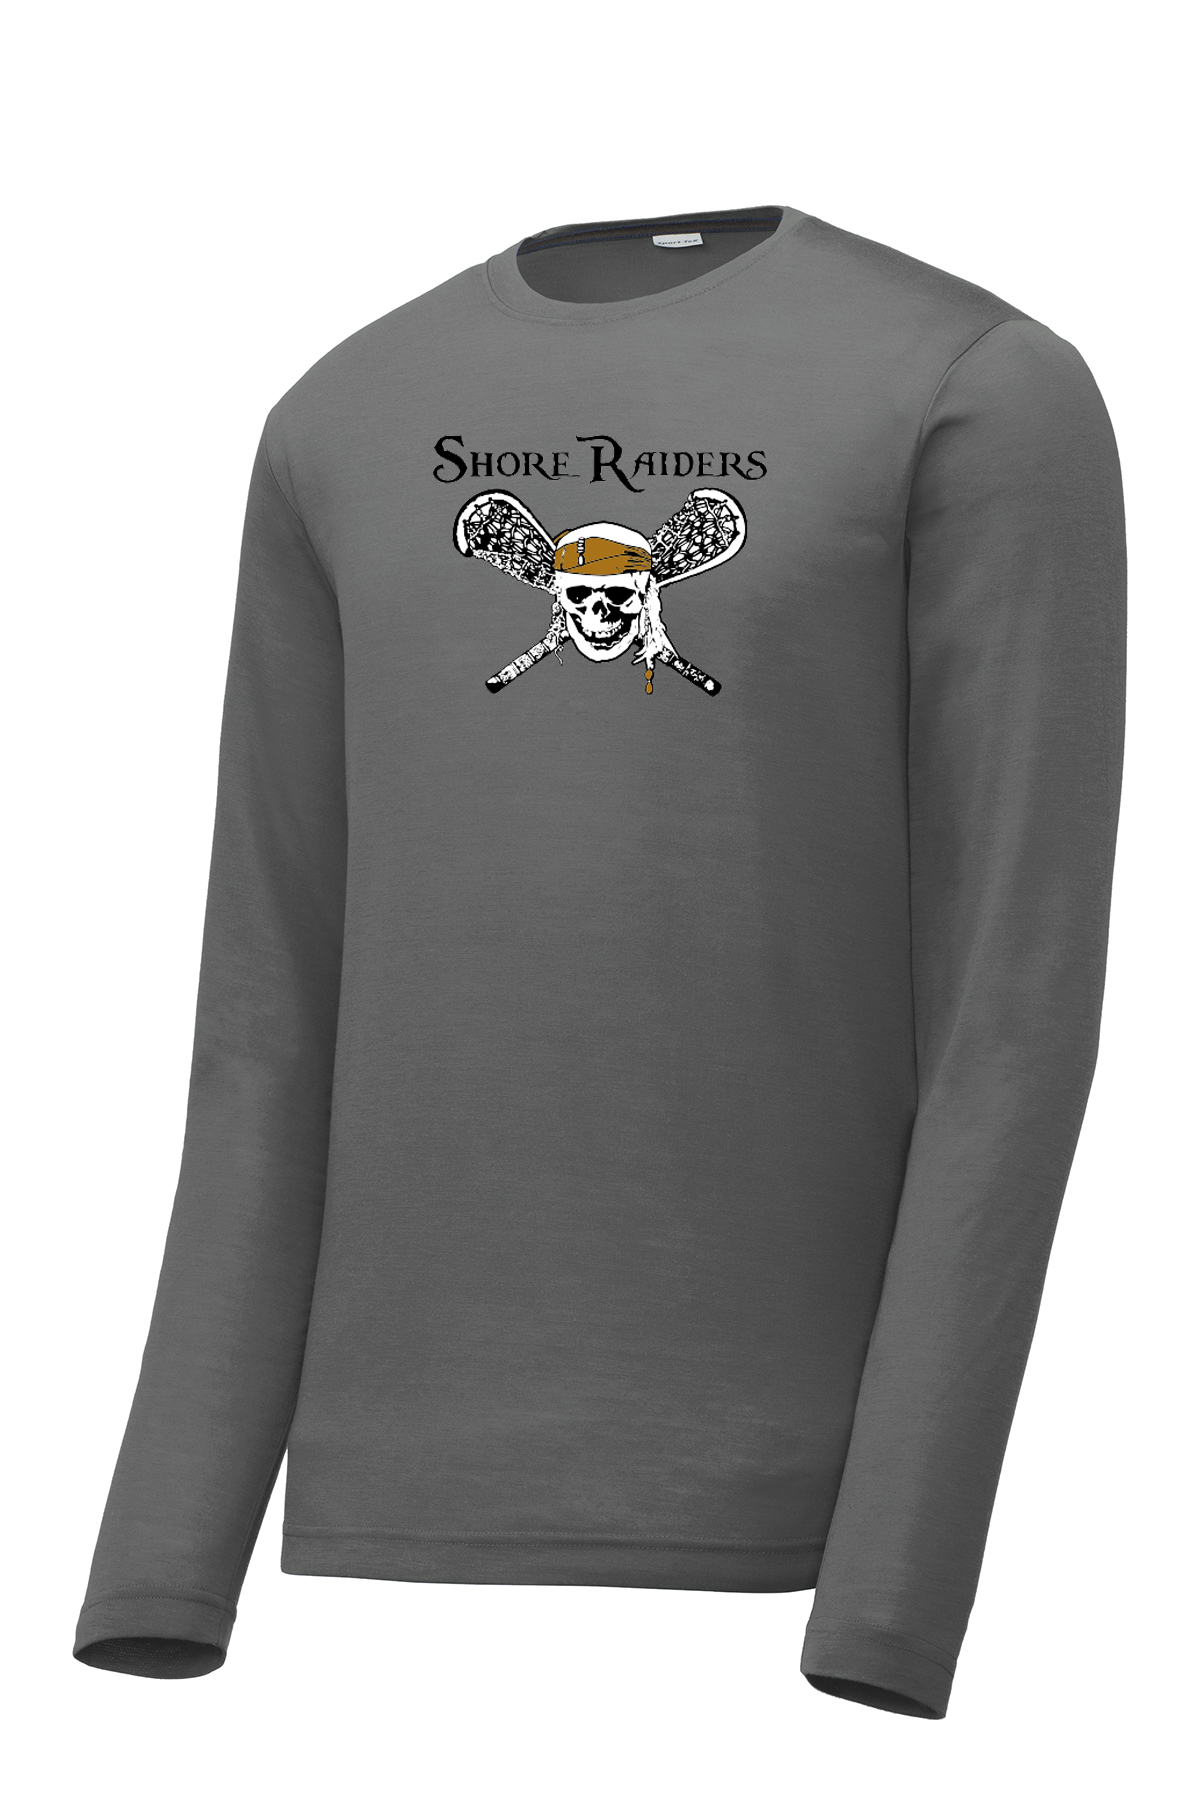 Shore Raiders Lacrosse Long Sleeve CottonTouch Performance Shirt